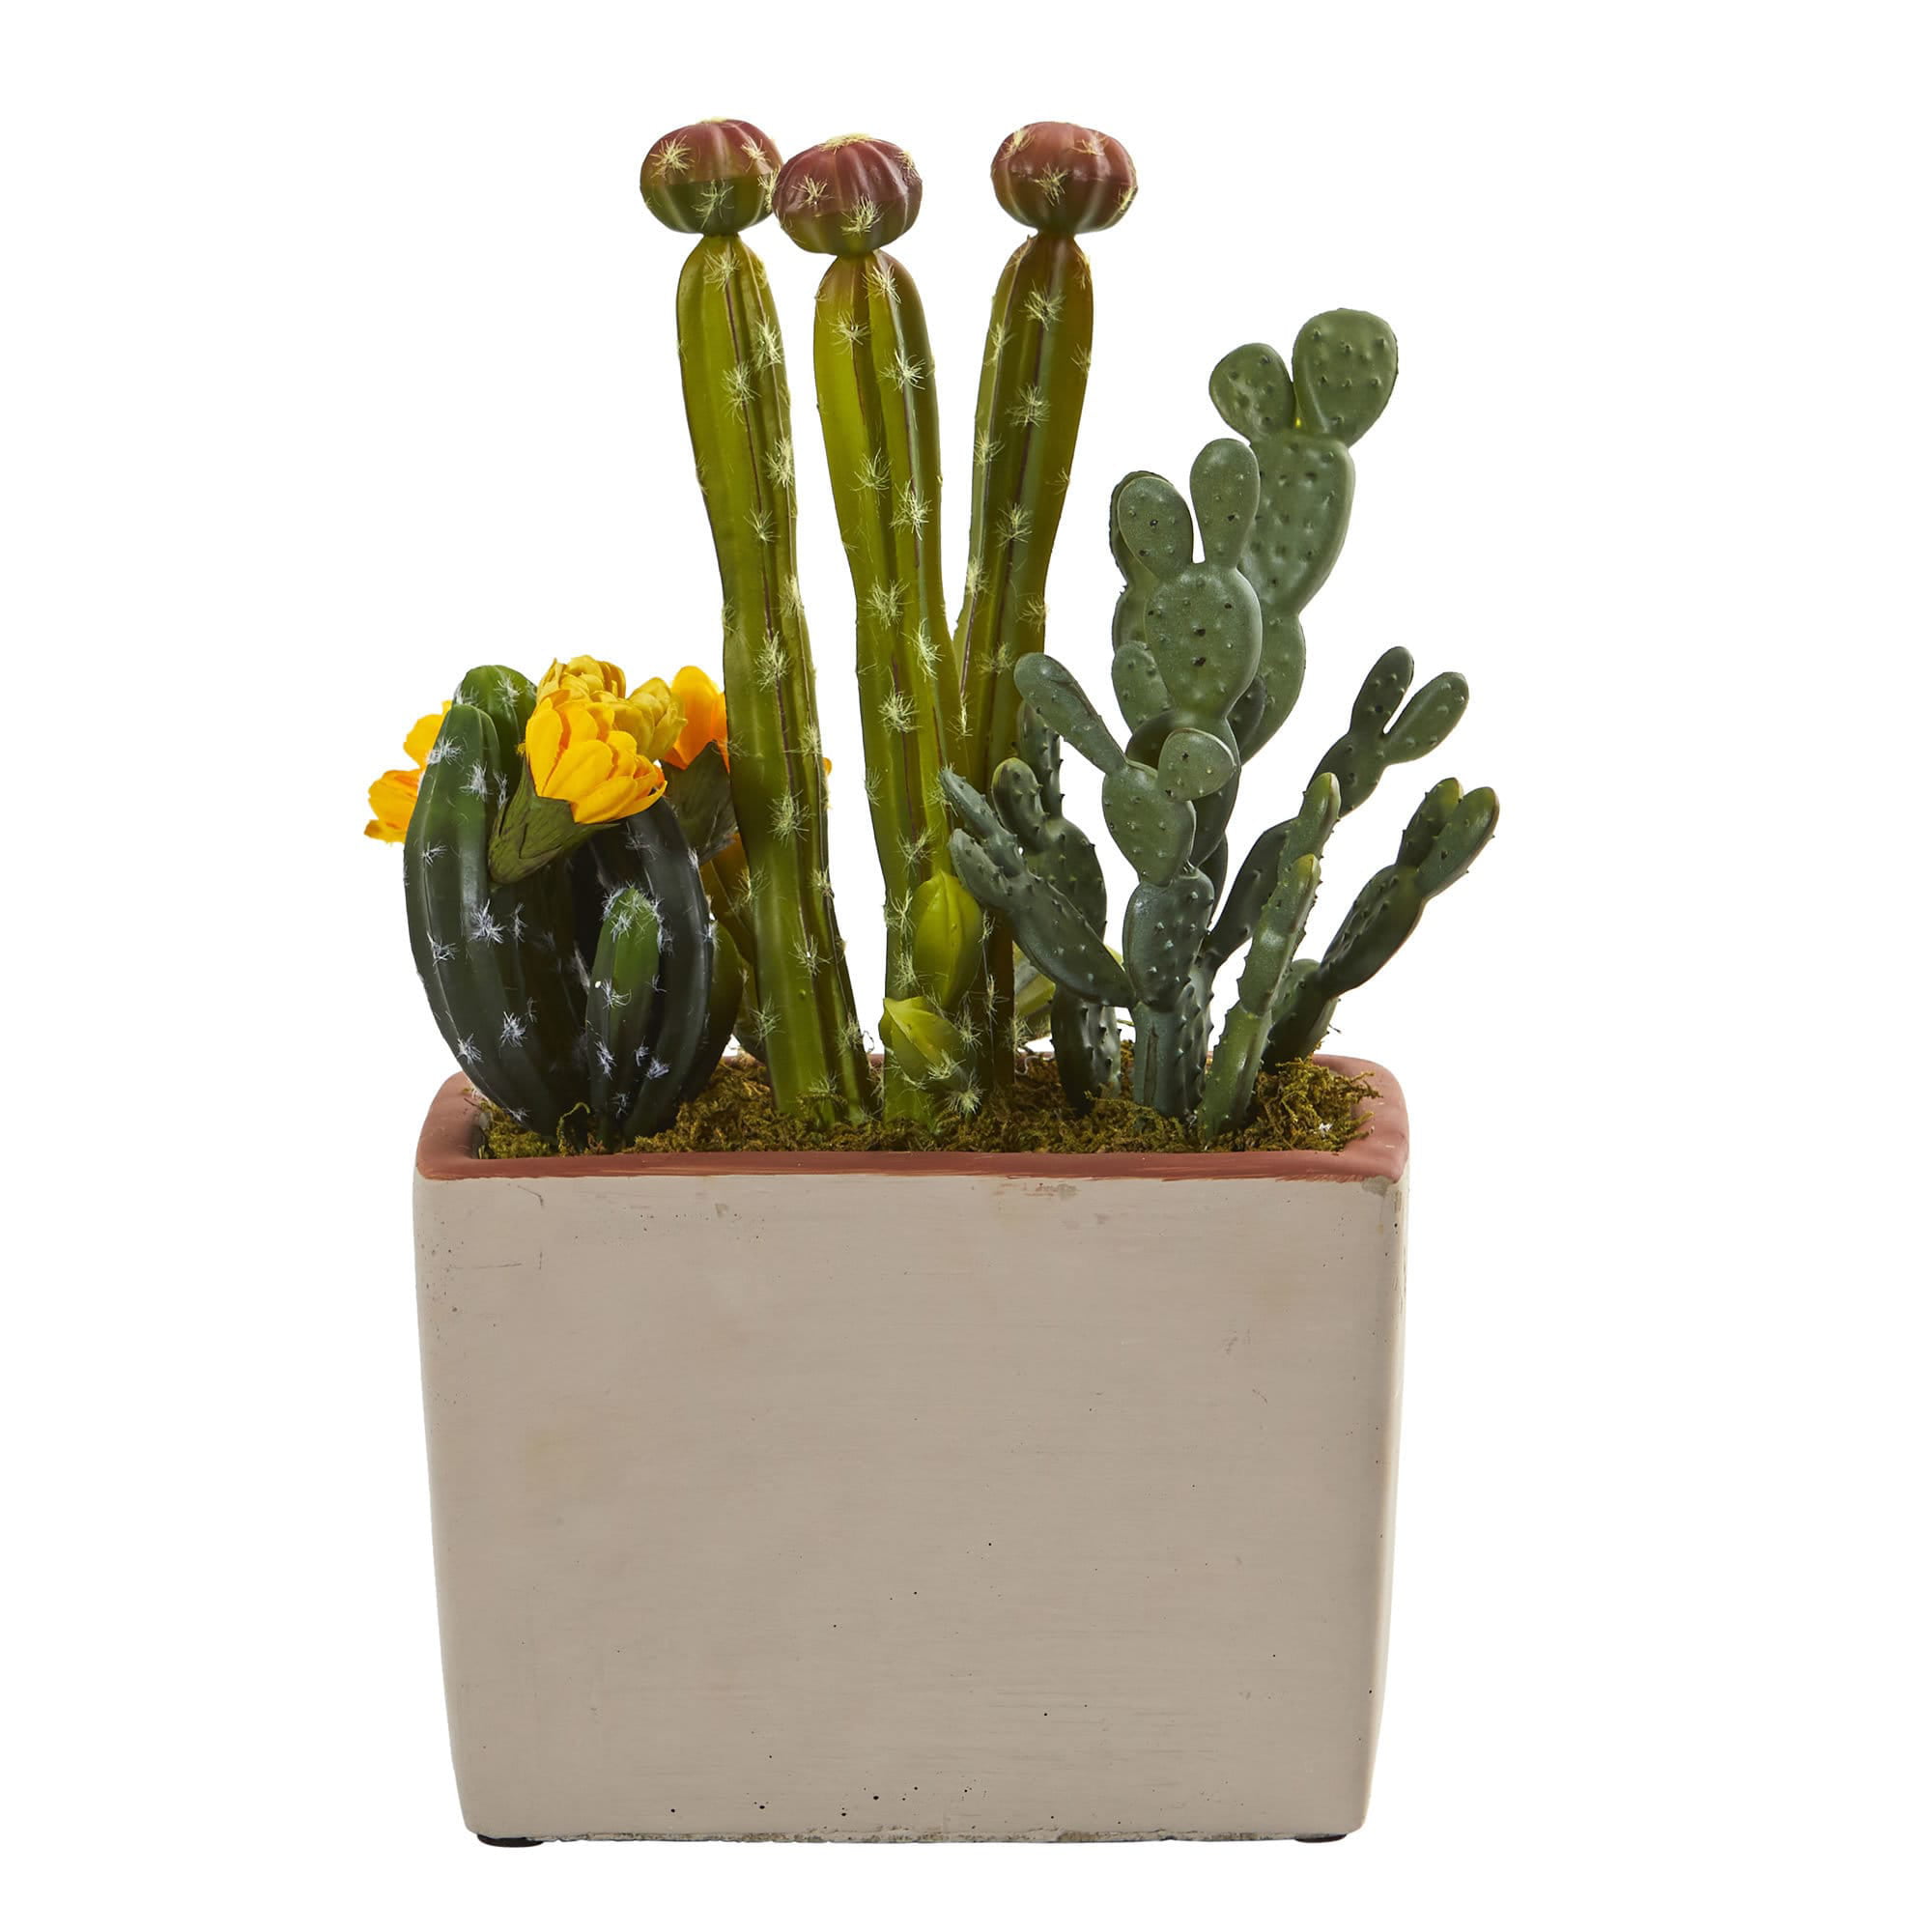 Small artificial cactus plants